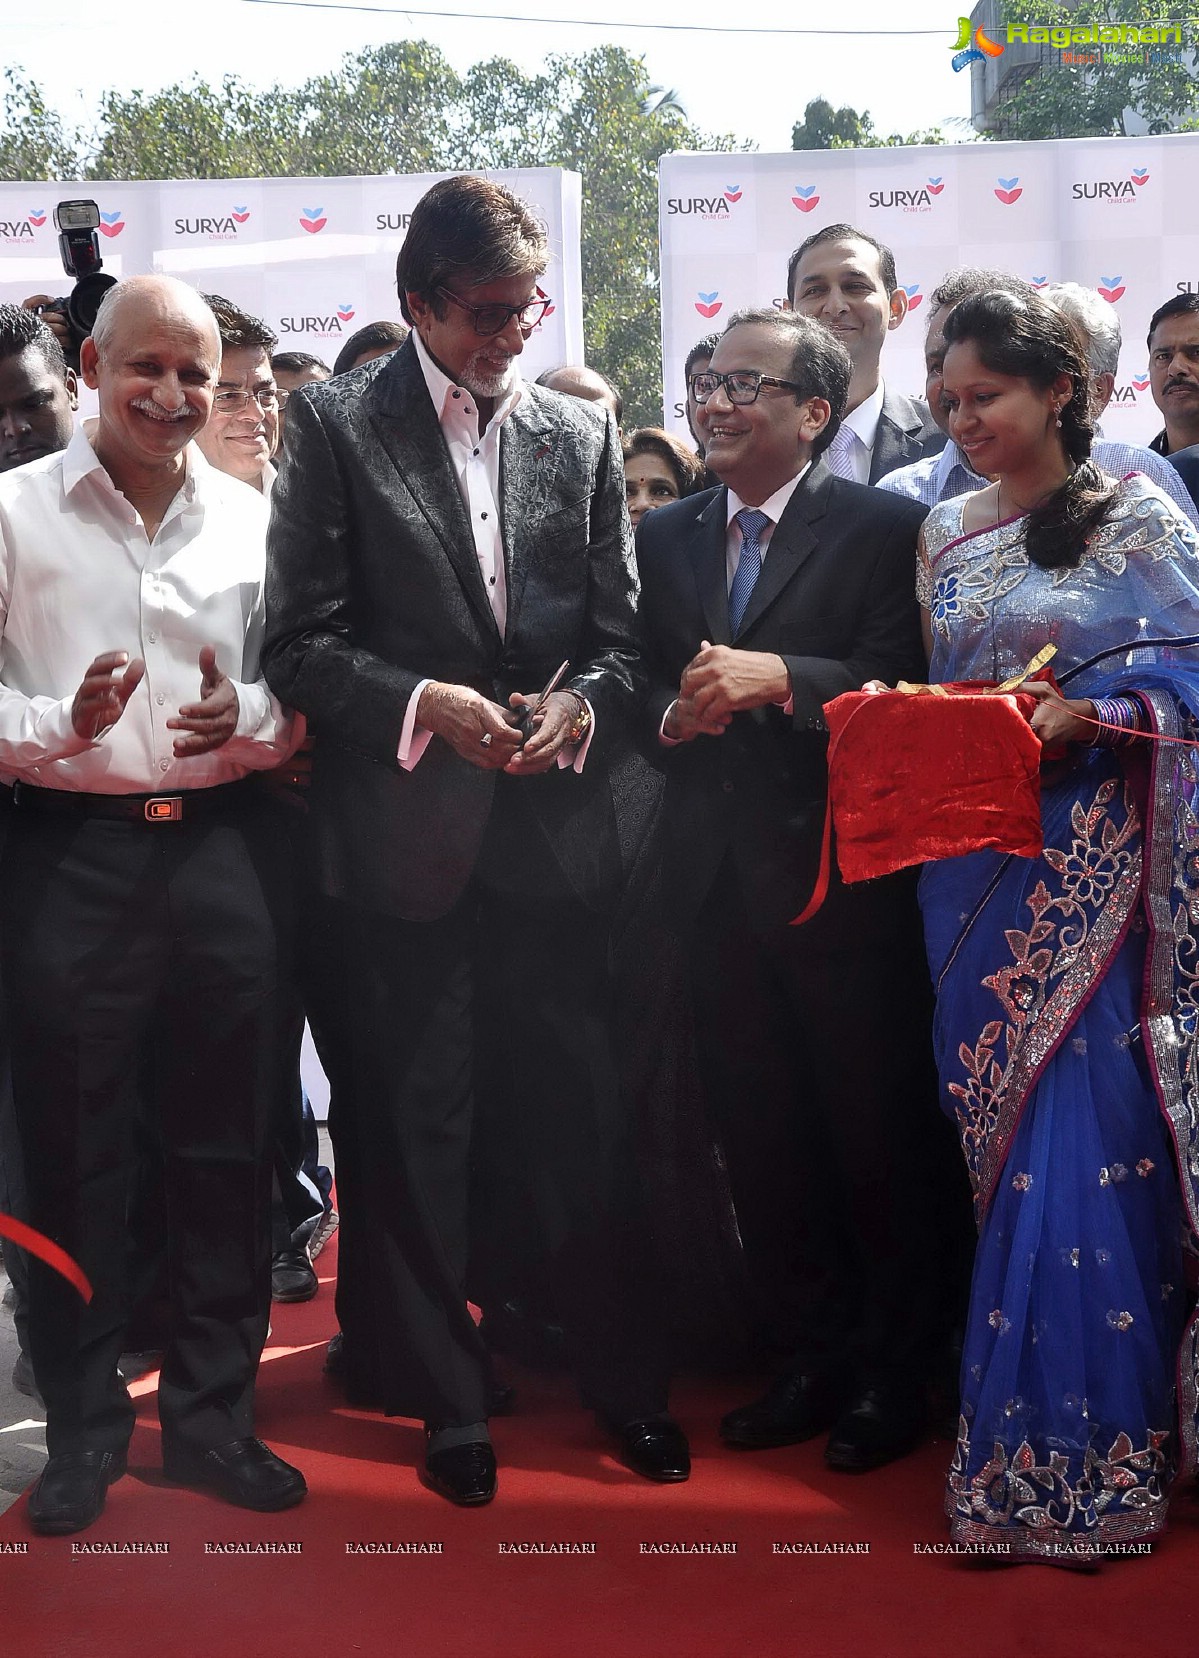 Amitabh Bachchan inaugurates Surya Child Care, Mumbai